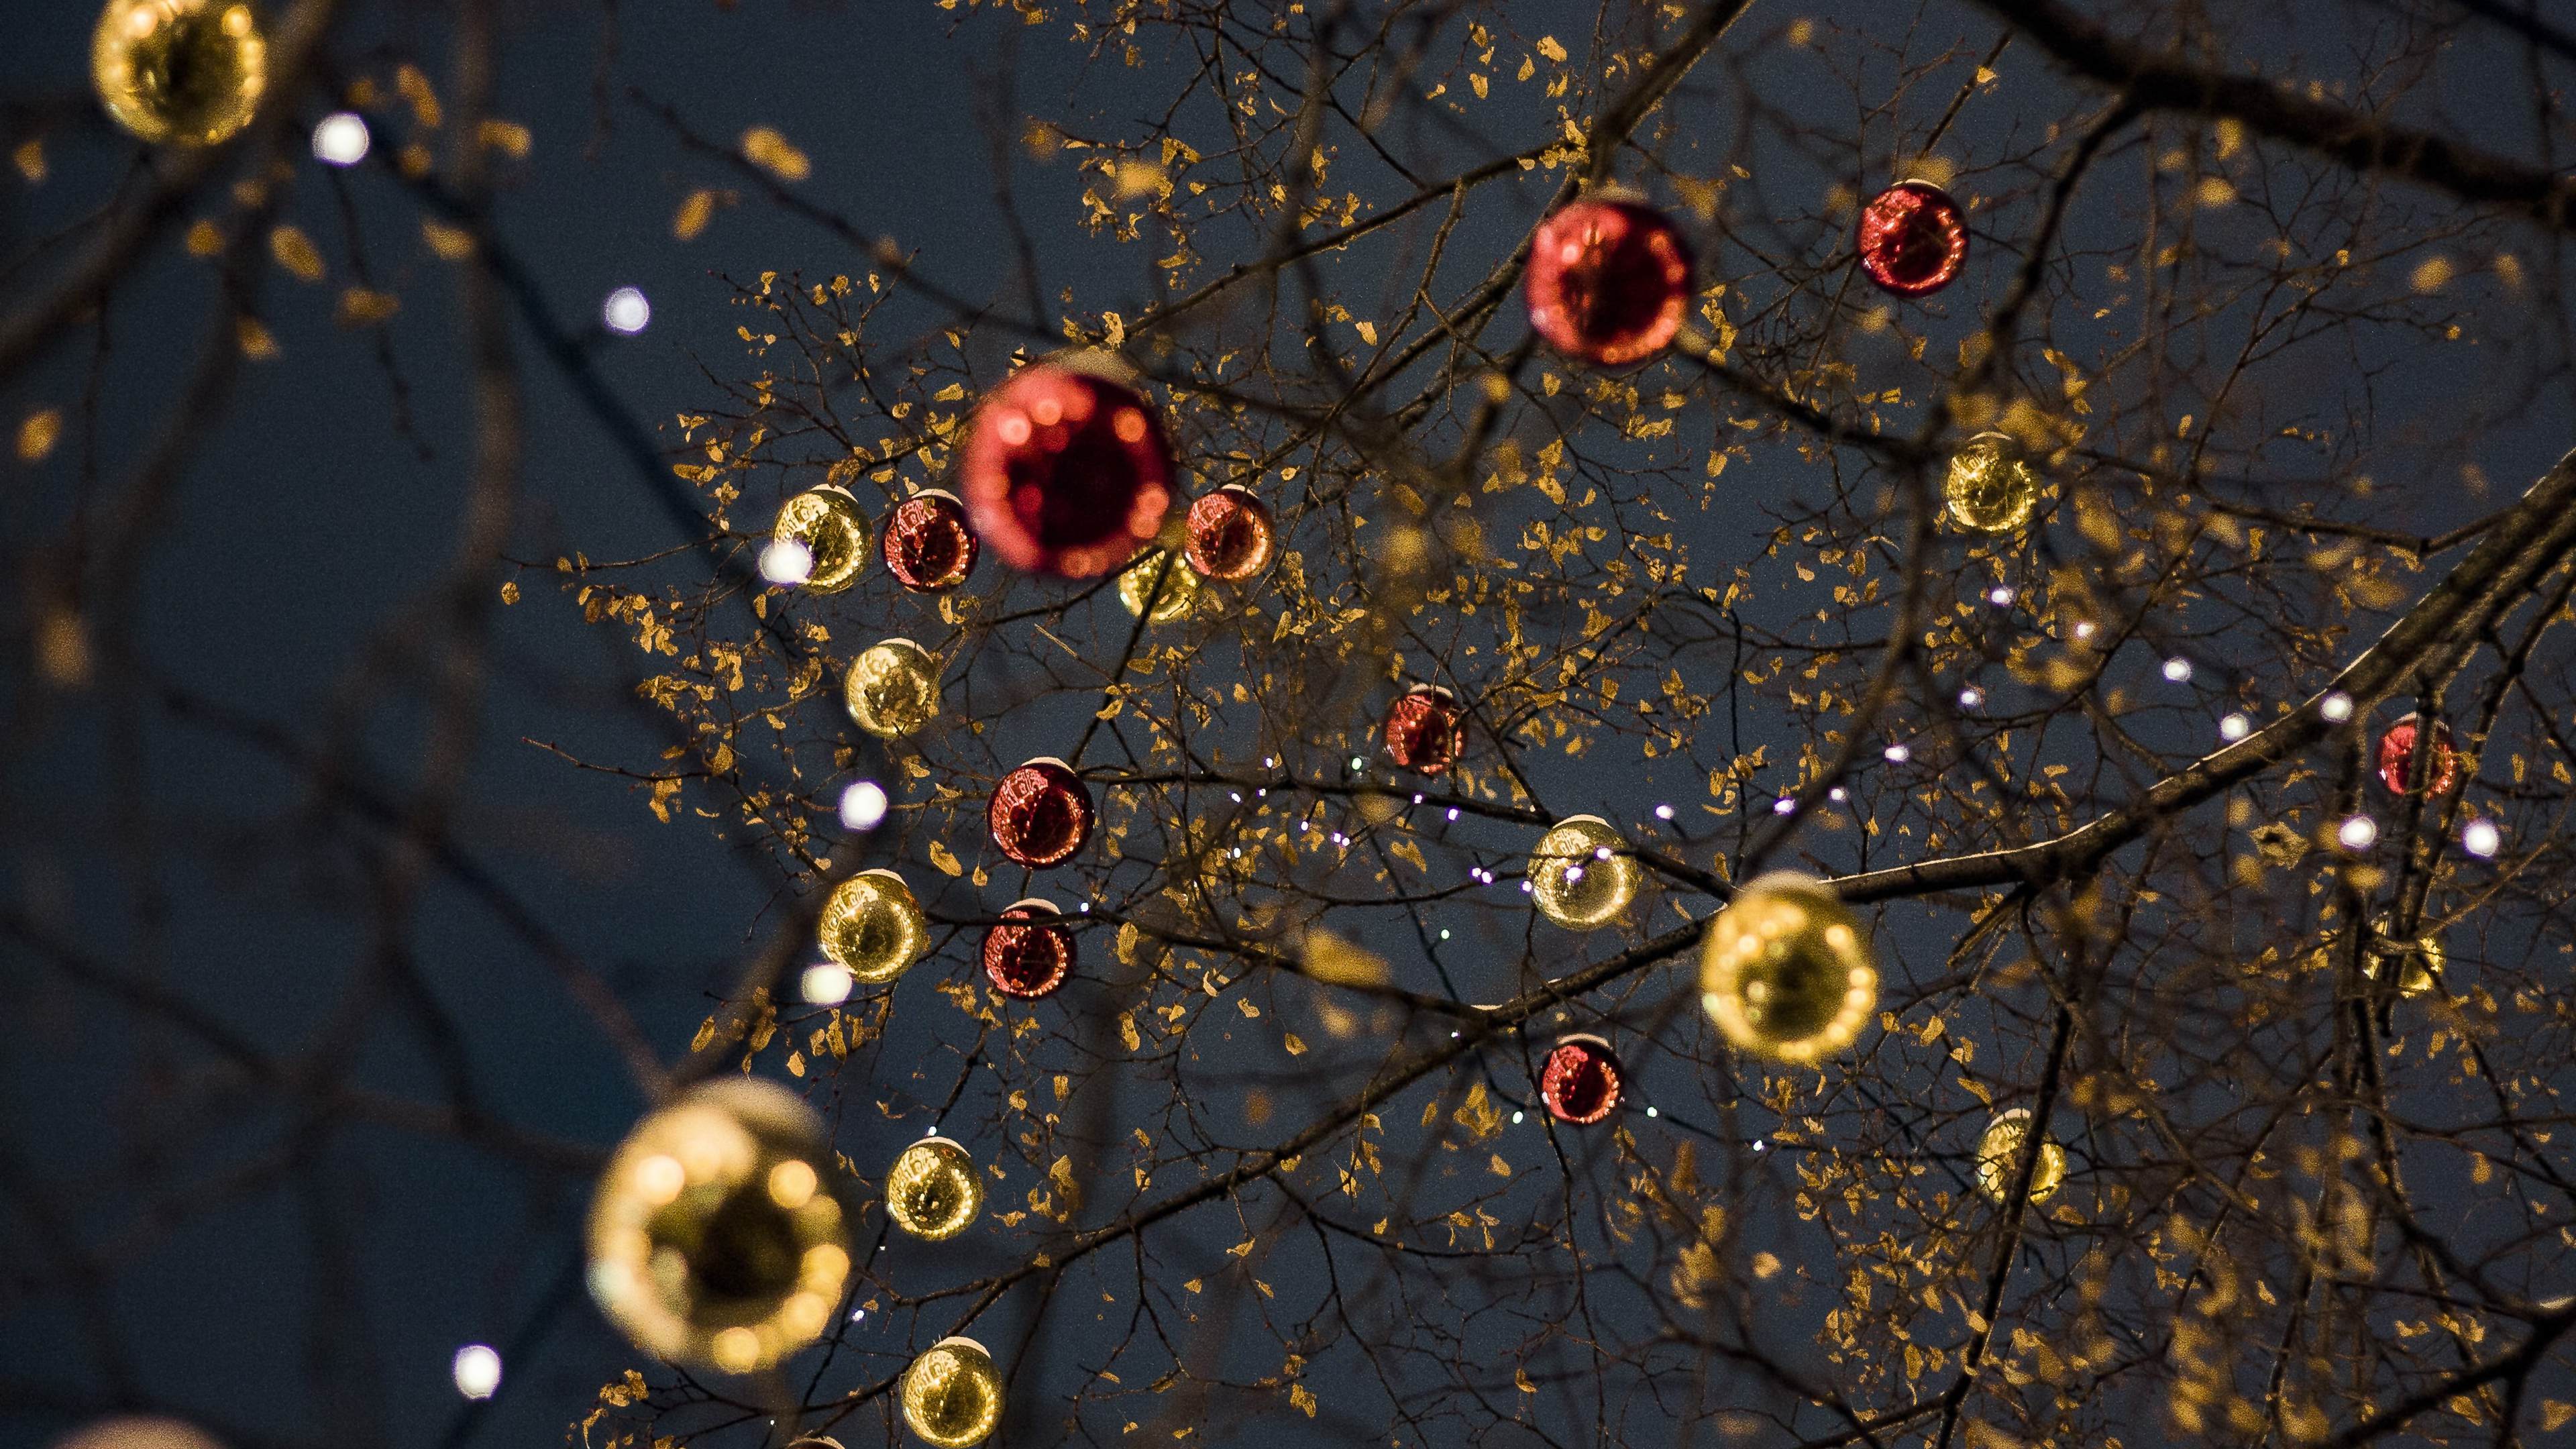 <span style='color:red;'>十二月</span> 圣诞节庆典树 灯 球等装饰物唯美壁纸图片 烘托气氛的